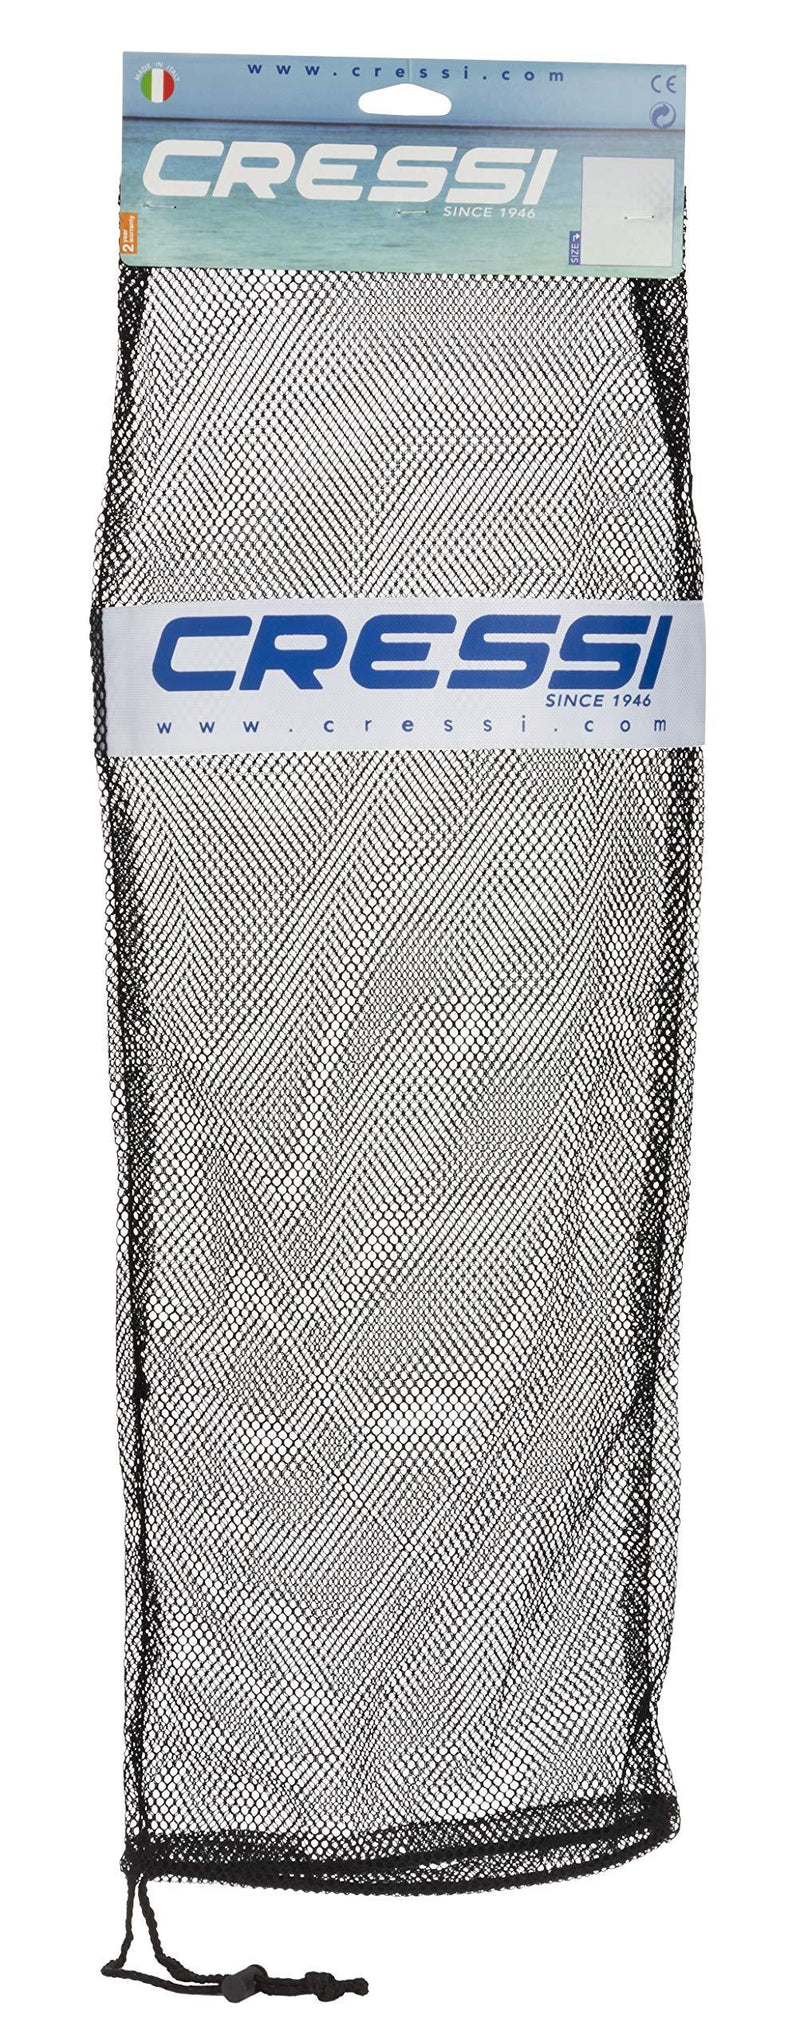 [AUSTRALIA] - Cressi Net Bag for Snorkeling, Scuba Freediving Sets - Mask, Snorkel, Fins Equipment Mesh Bag, Black, 29.5 x 10.6 in, 75 x 27.5 cm (BZ175003) 